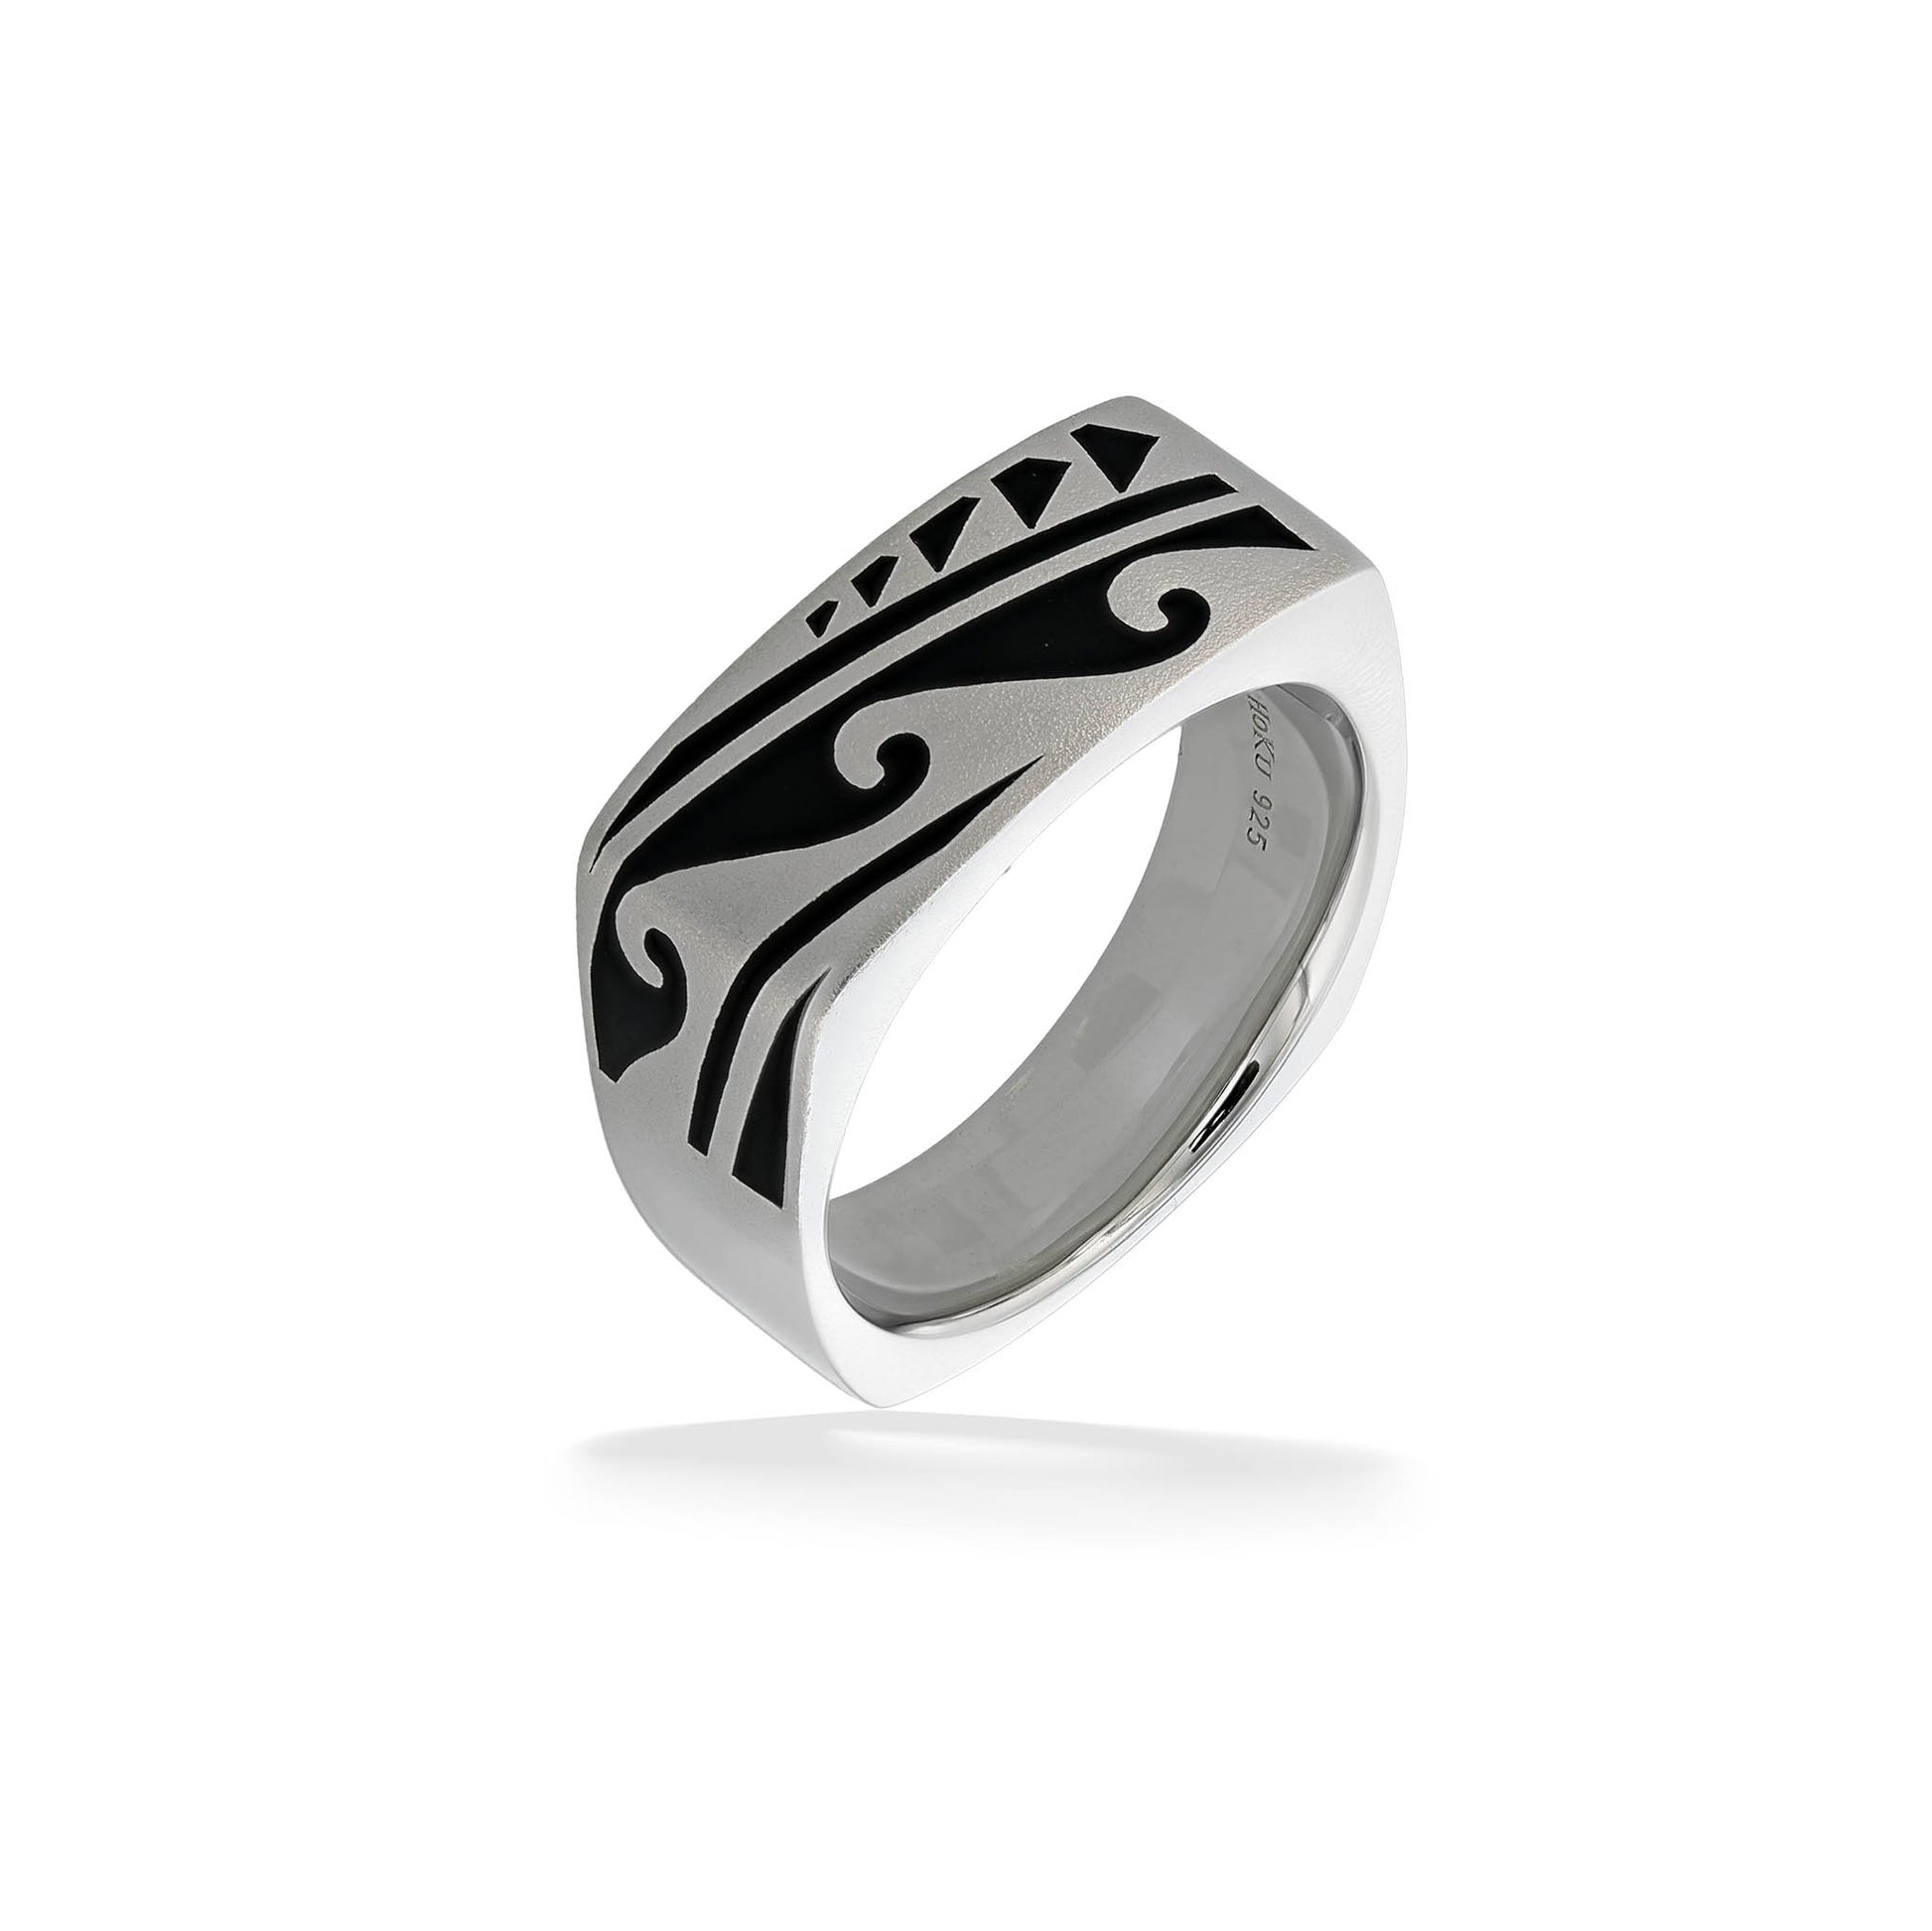 44857 - Sterling Silver - Ocean Kai Ring, Size 11